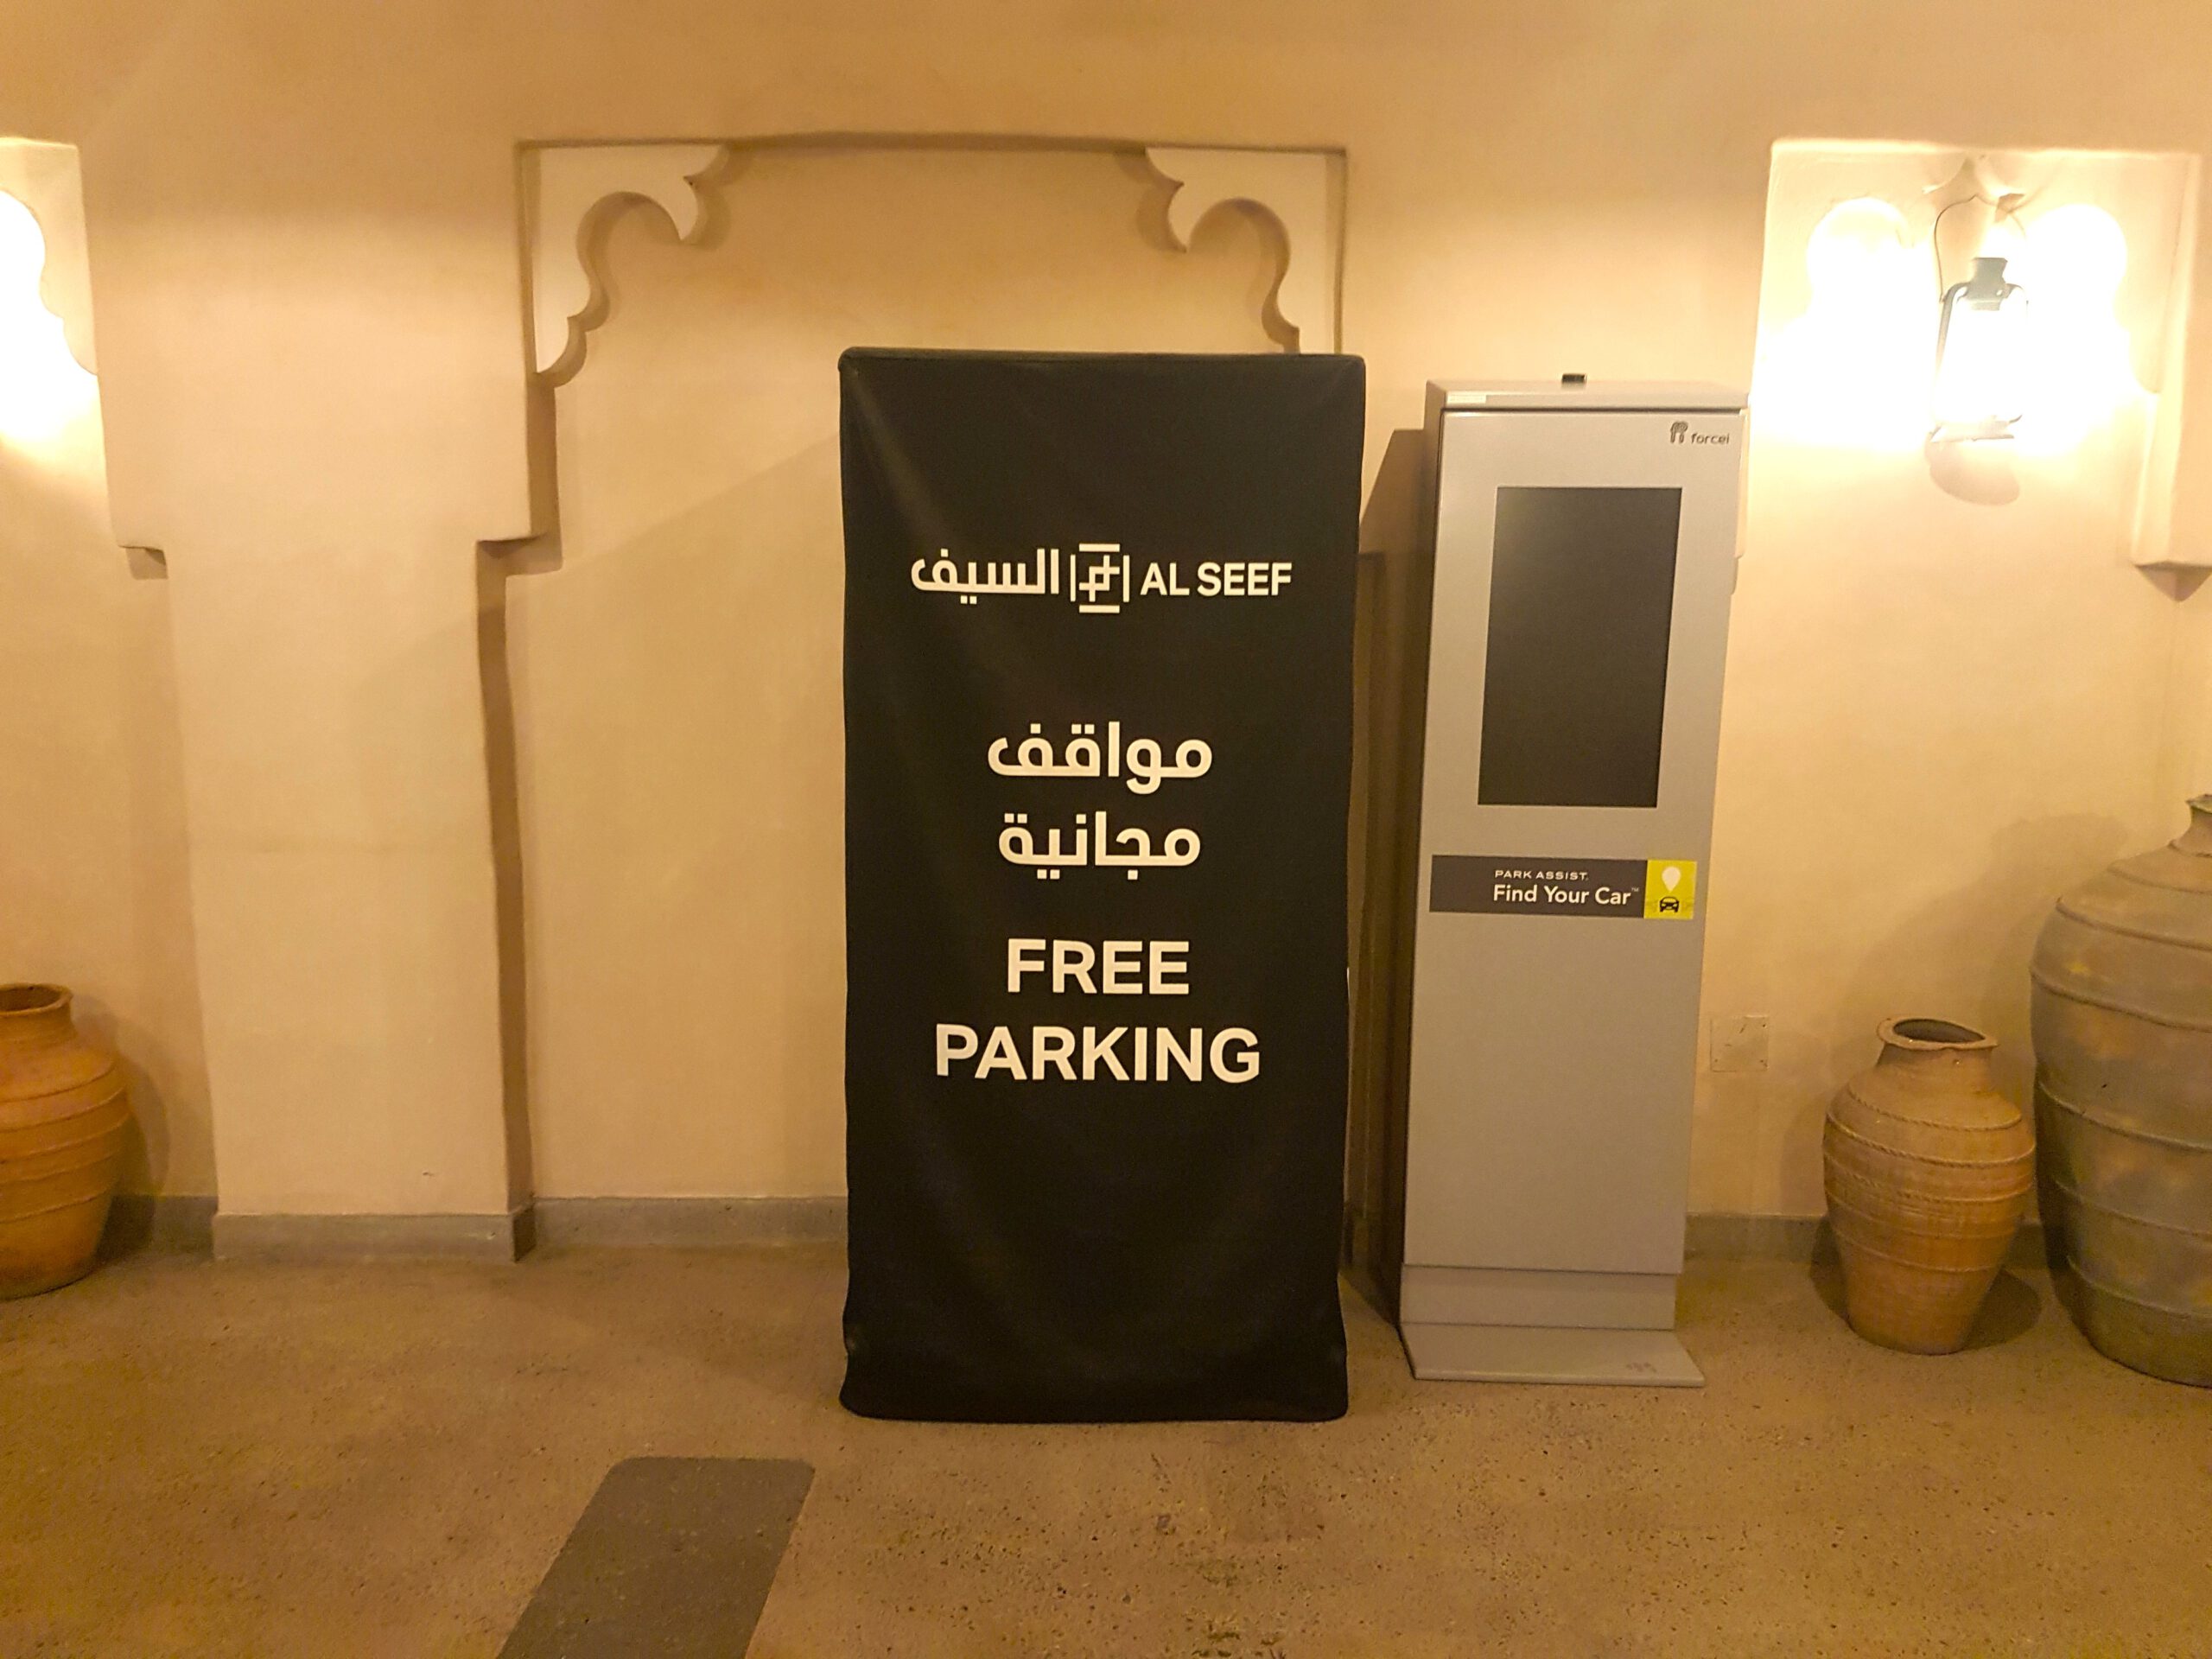 Al Seef Dubai - Free parking